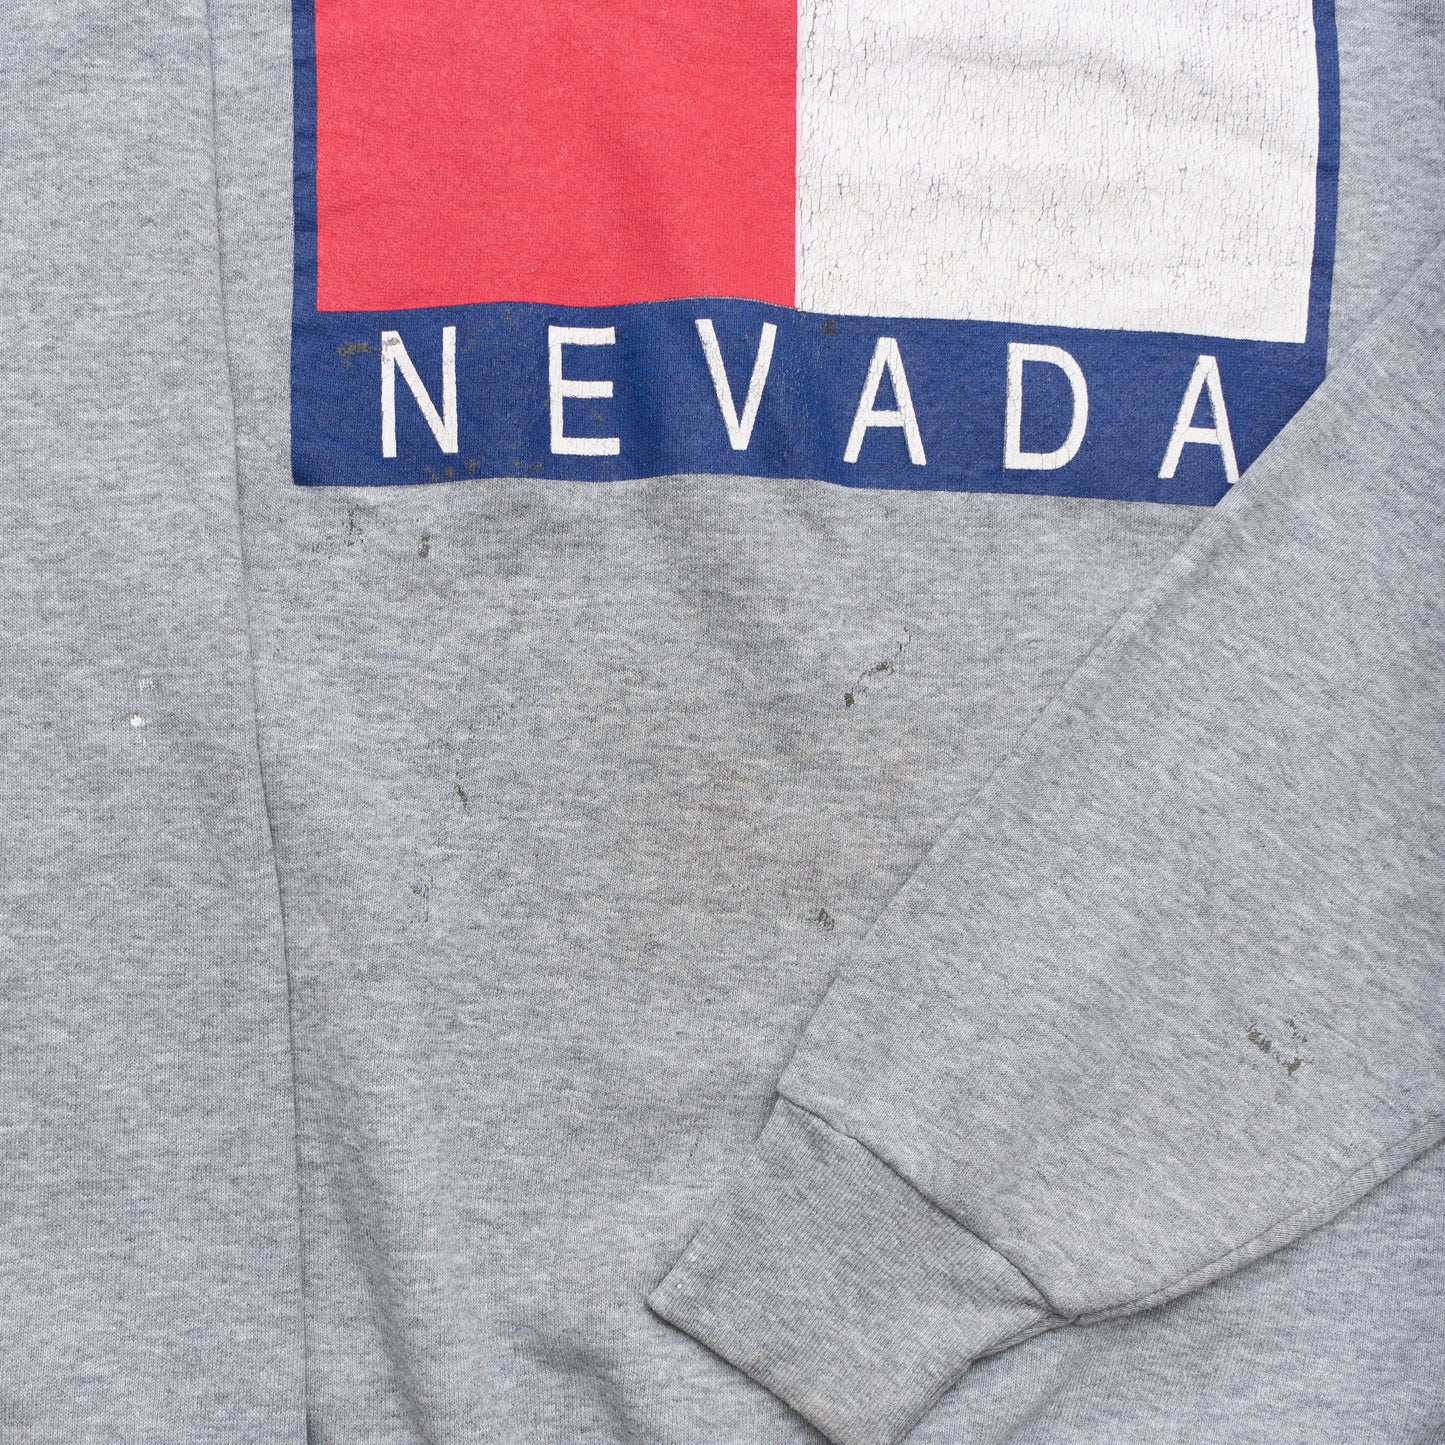 Las Vegas Nevada Souvenir Sweater, XL